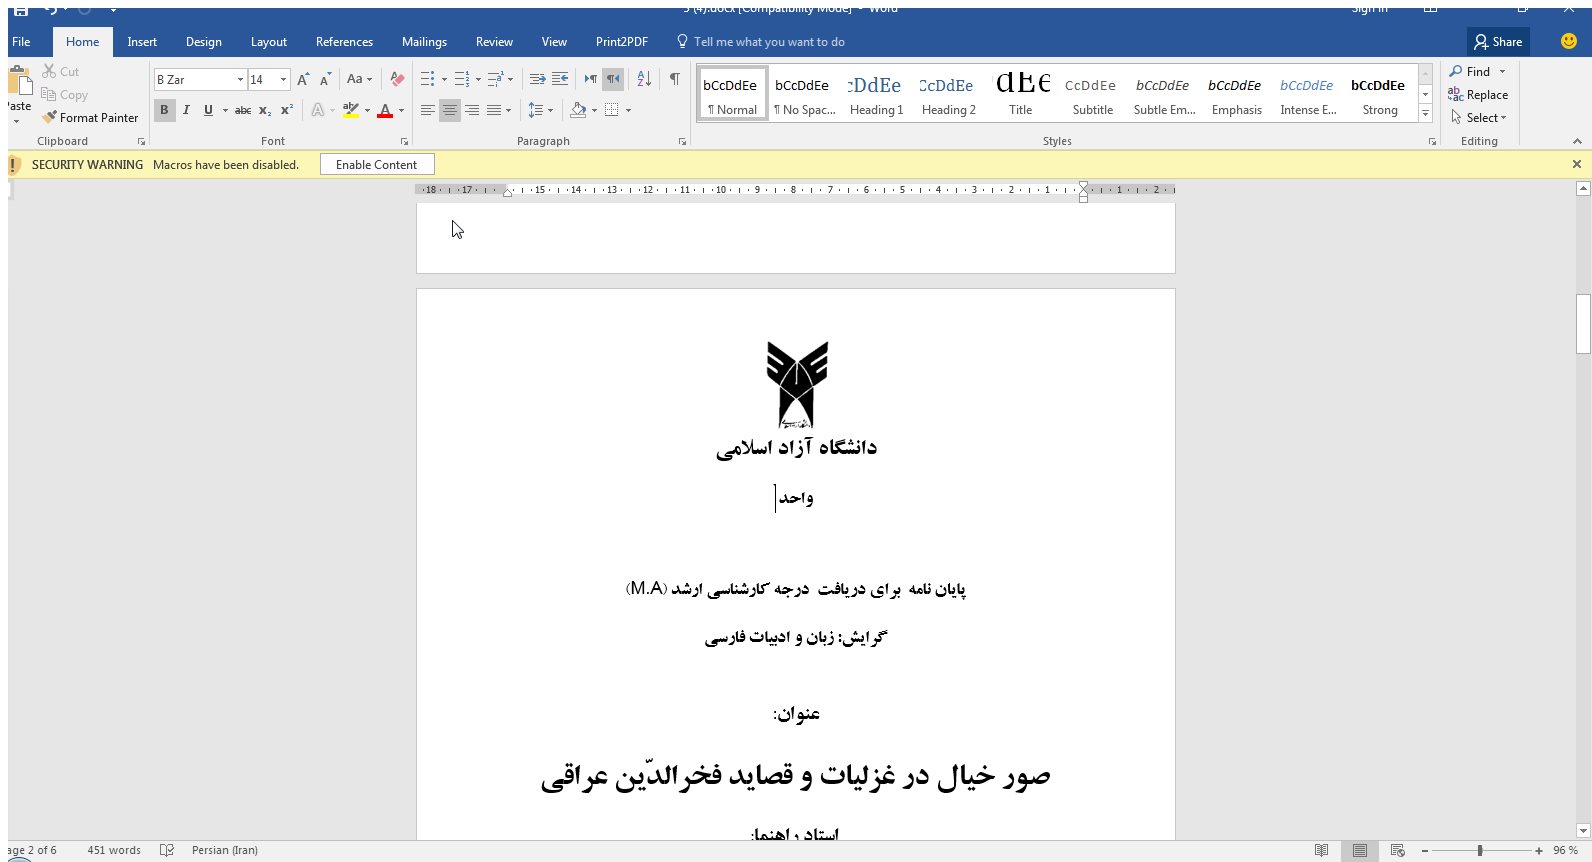 <span>پایان نامه کارشناسی ارشد زبان و ادبیات فارسی صورخیال درغزلیّات و قصاید فخرالدّین عراقی</span>